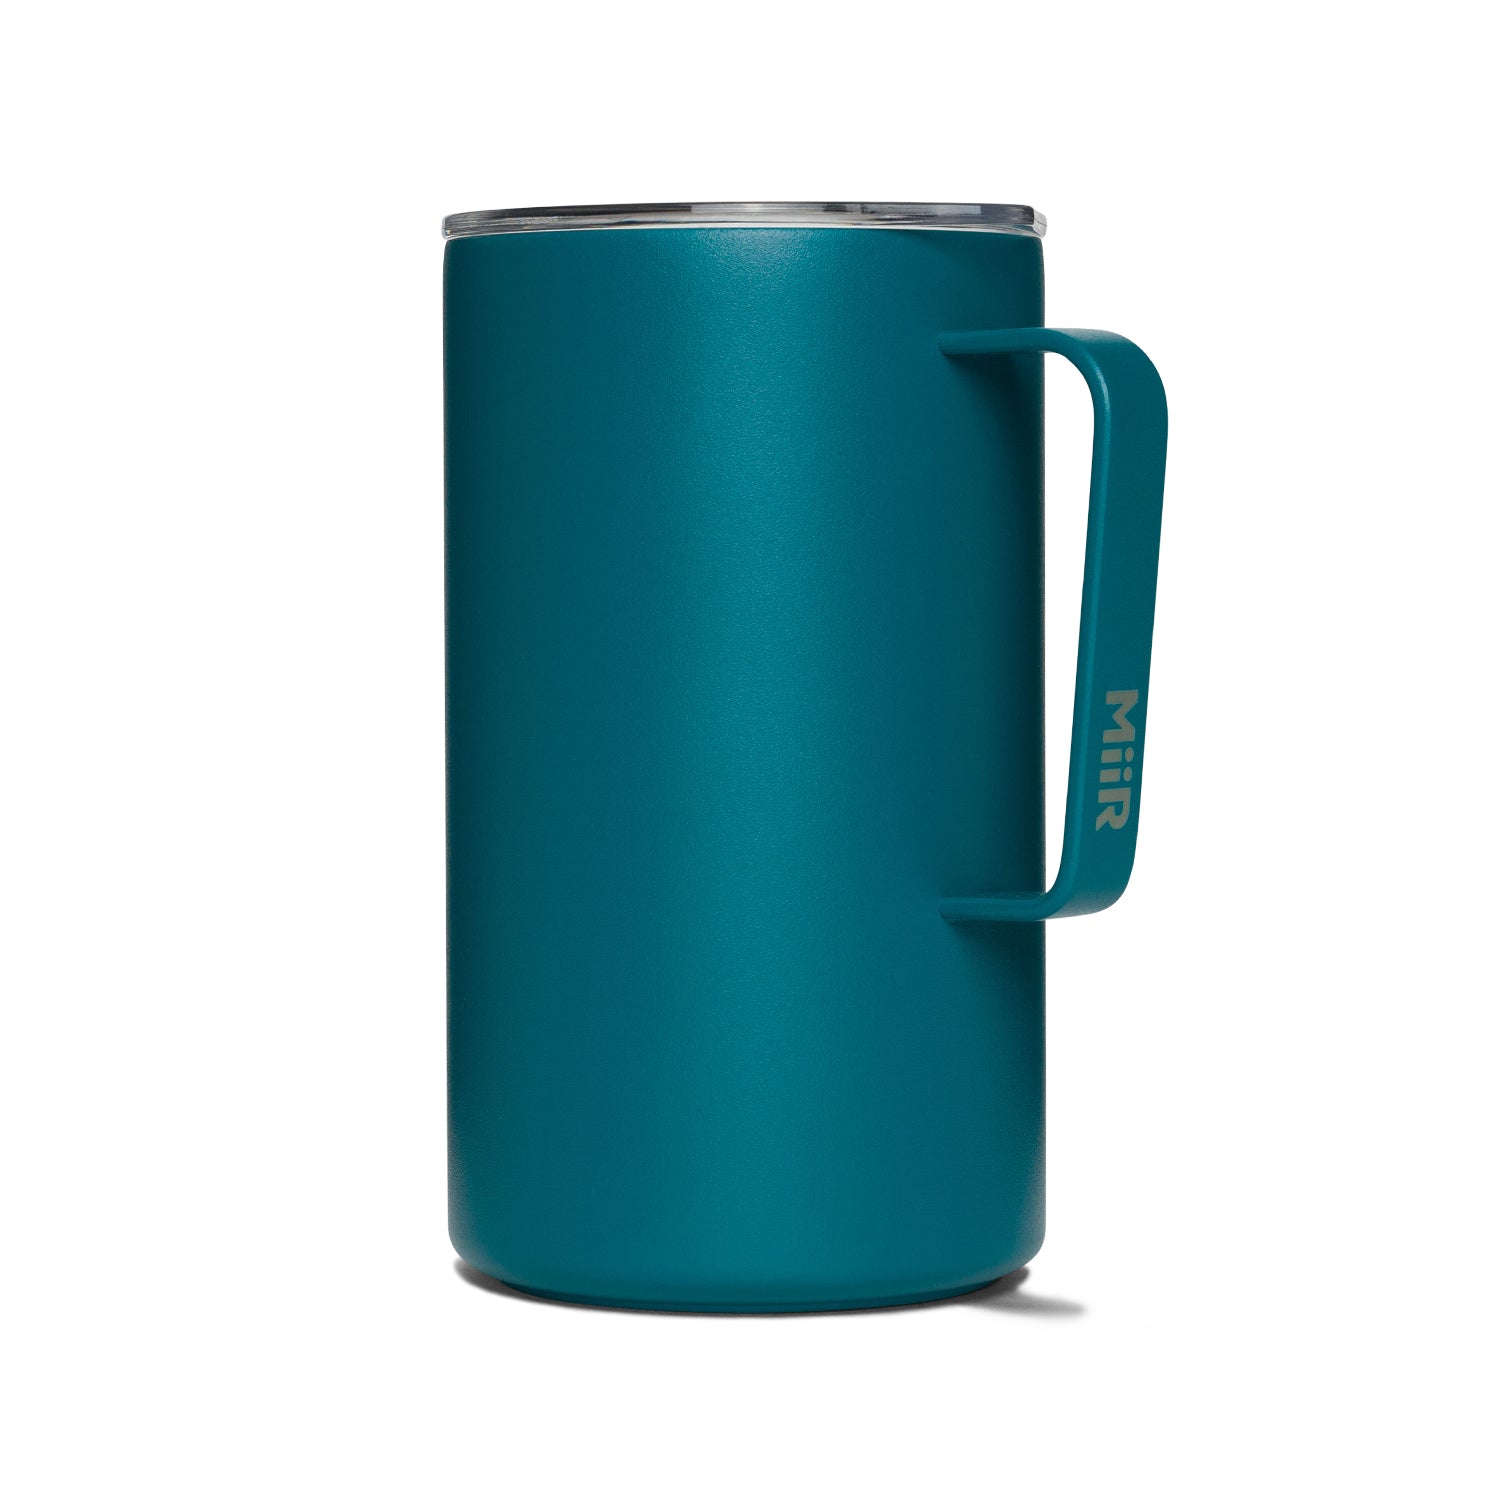 Springline MiiR Tomo Insulated Mug Set – Springline Coffee